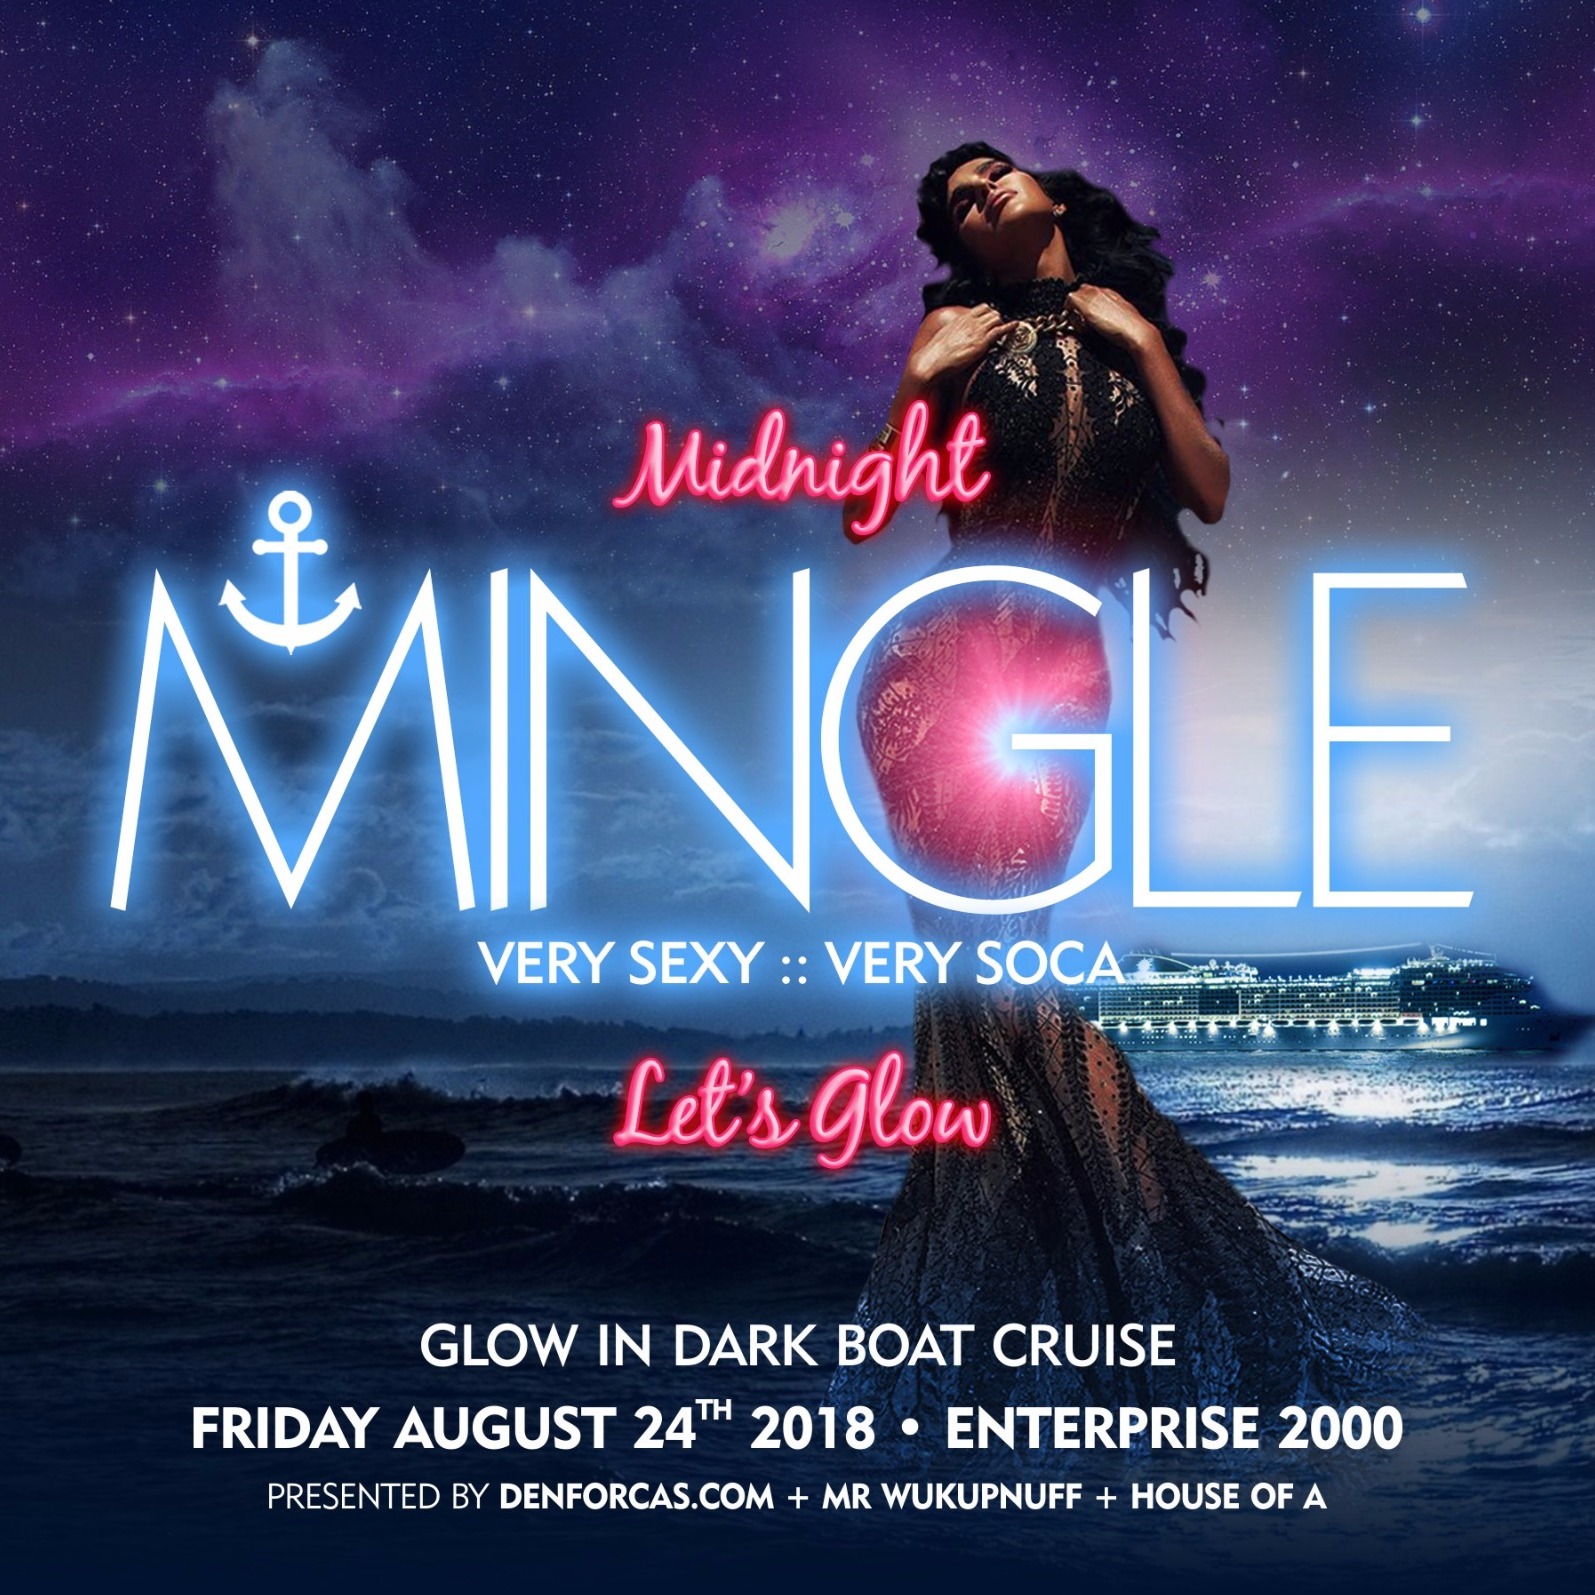 Midnight Mingle - Very Sexy, Very Soca - Let Glow In Dark Boat Cruise